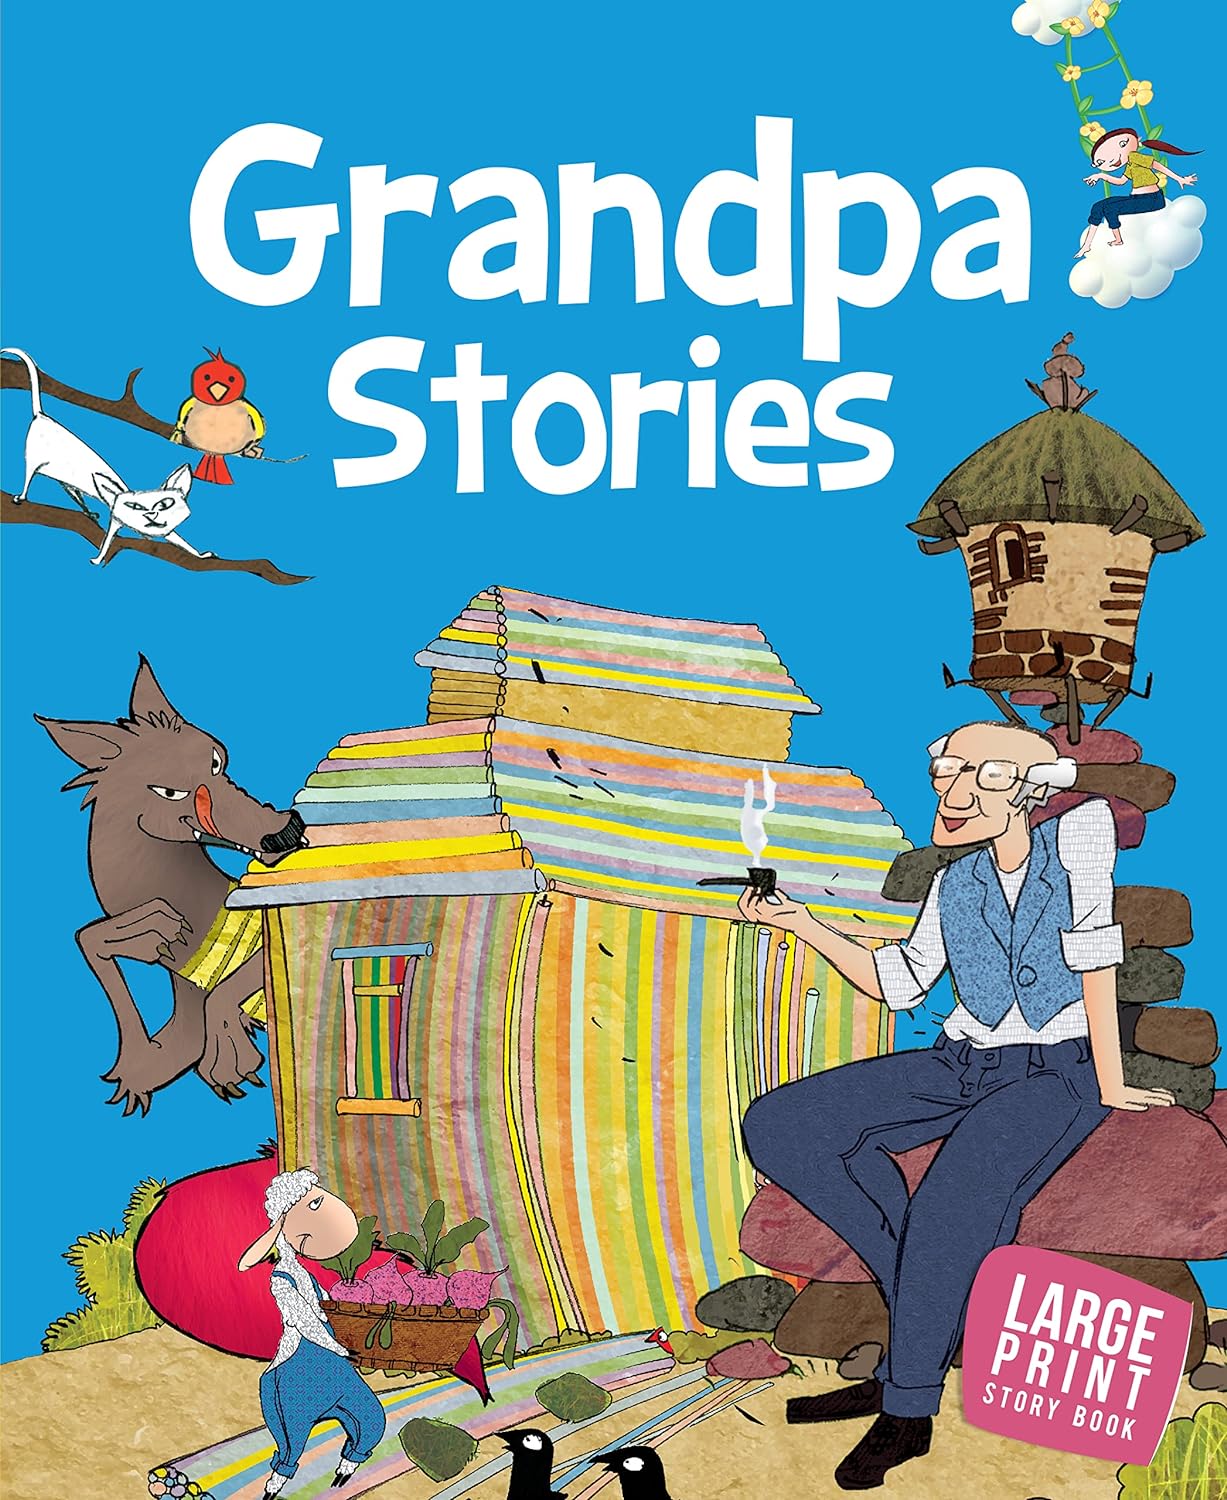 GRANDPA STORIES (Large Print Story Book) (পেপারব্যাক)